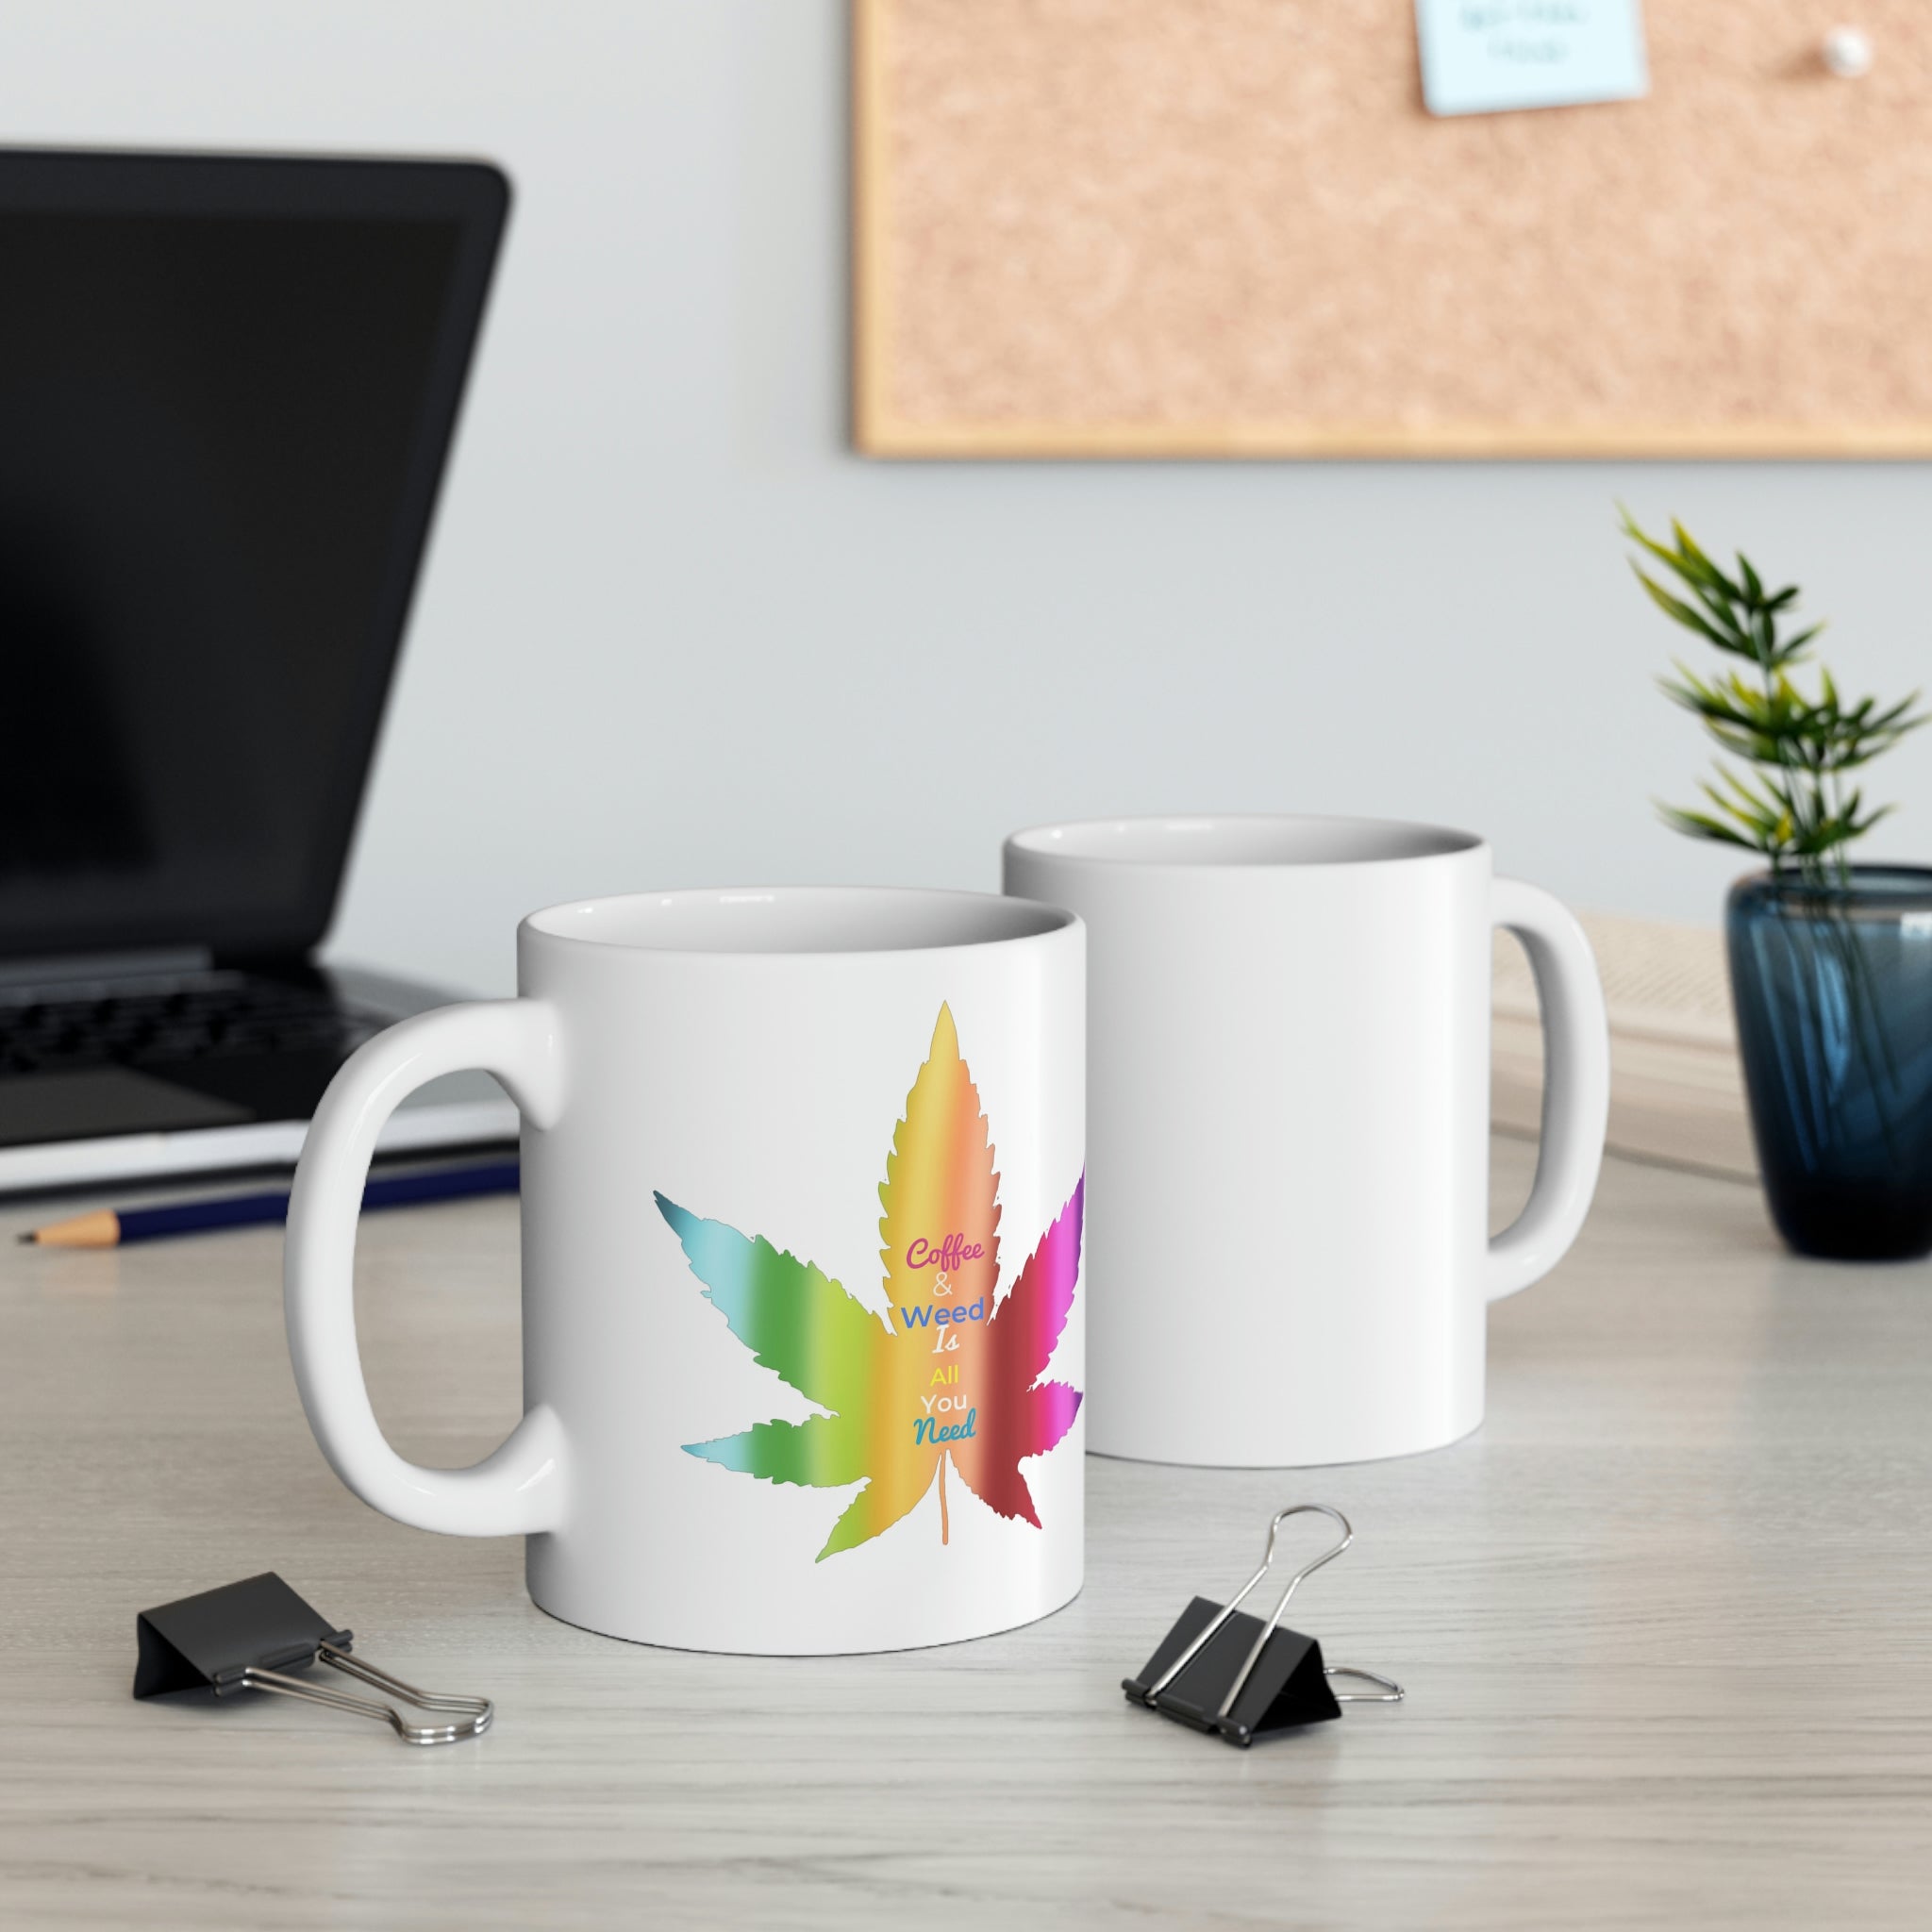 Coffee & Weed Ceramic Mug 11oz